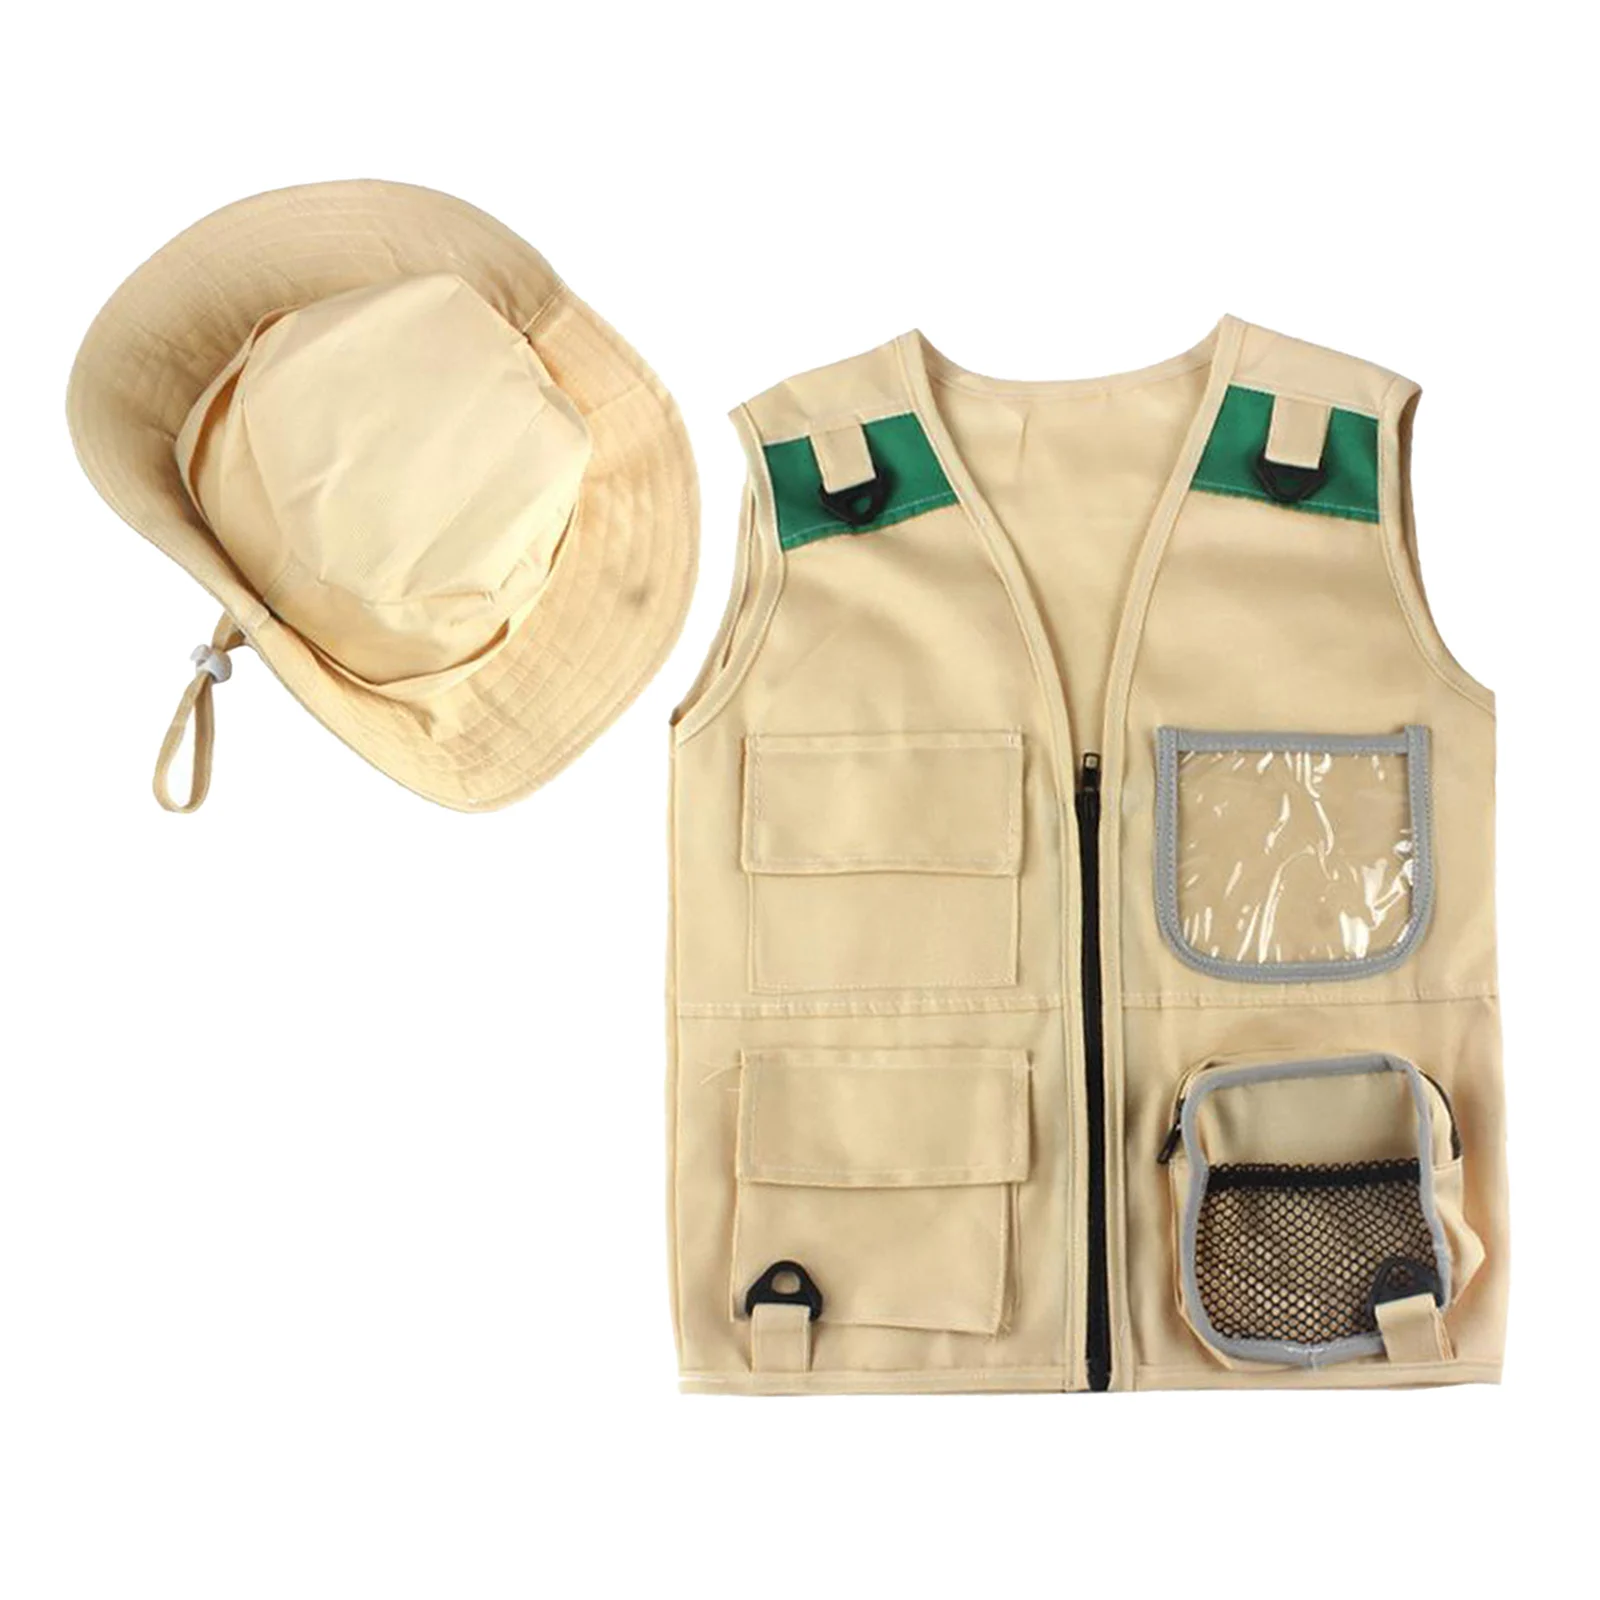 Outdoor Adventure Kit for Young Kids,Cargo Vest and Hat Set Backyard Explorer Safari Costume and Dress Up for Park Ranger